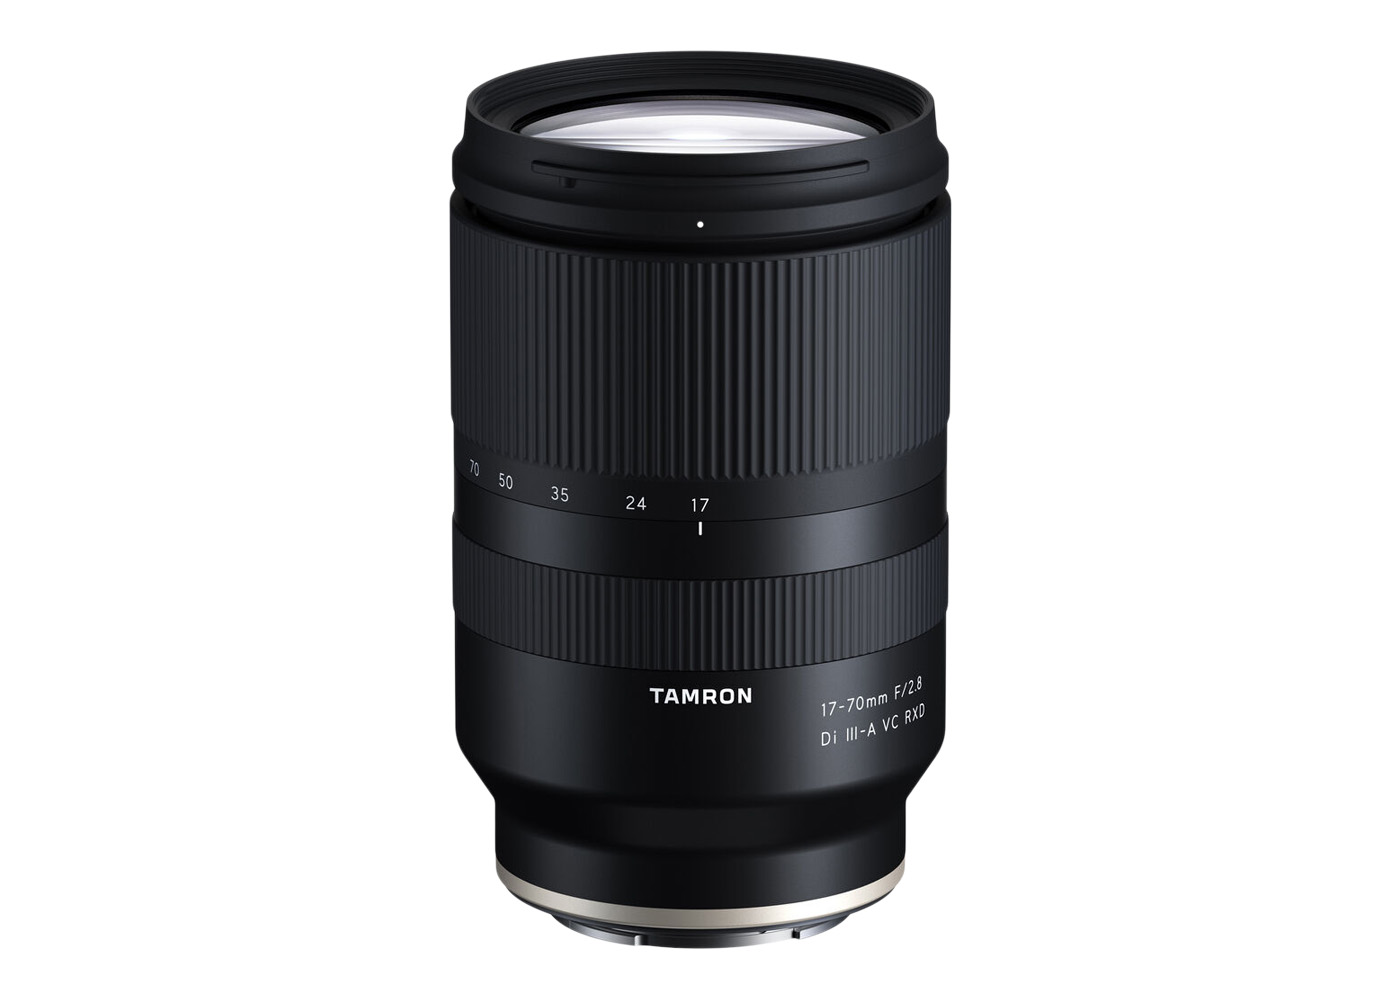 Tamron Sony 70-300mm F/4.5-6.3 Di III RXD Lens A047 AFA047S700 - CN